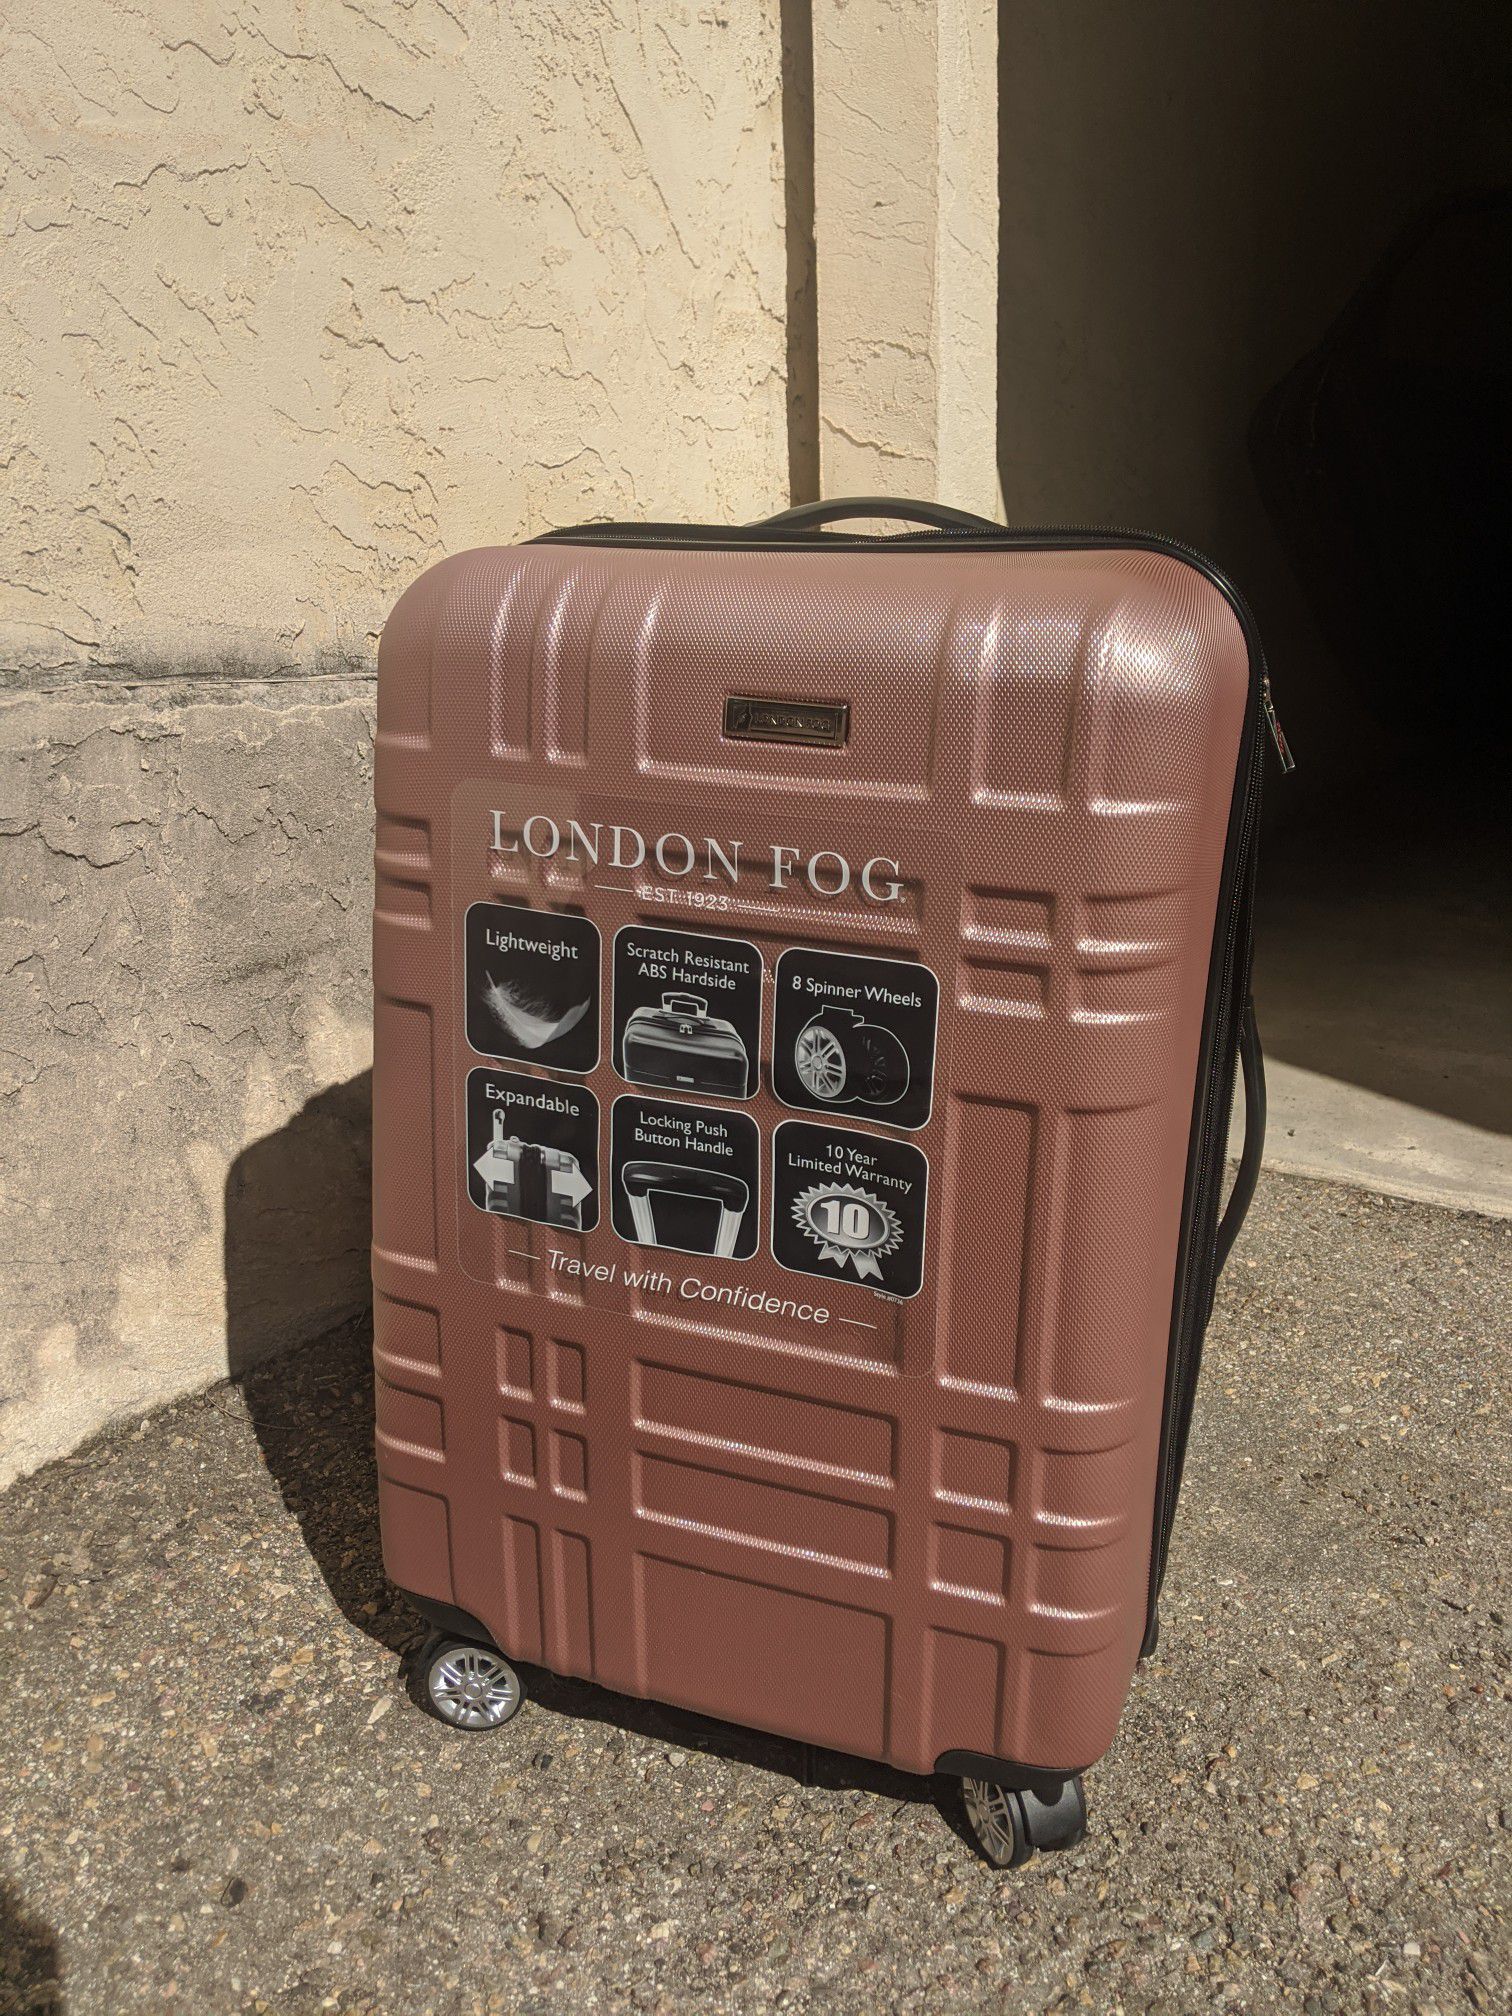 NEW London Fog Rolling Swivel Travel Suitcase